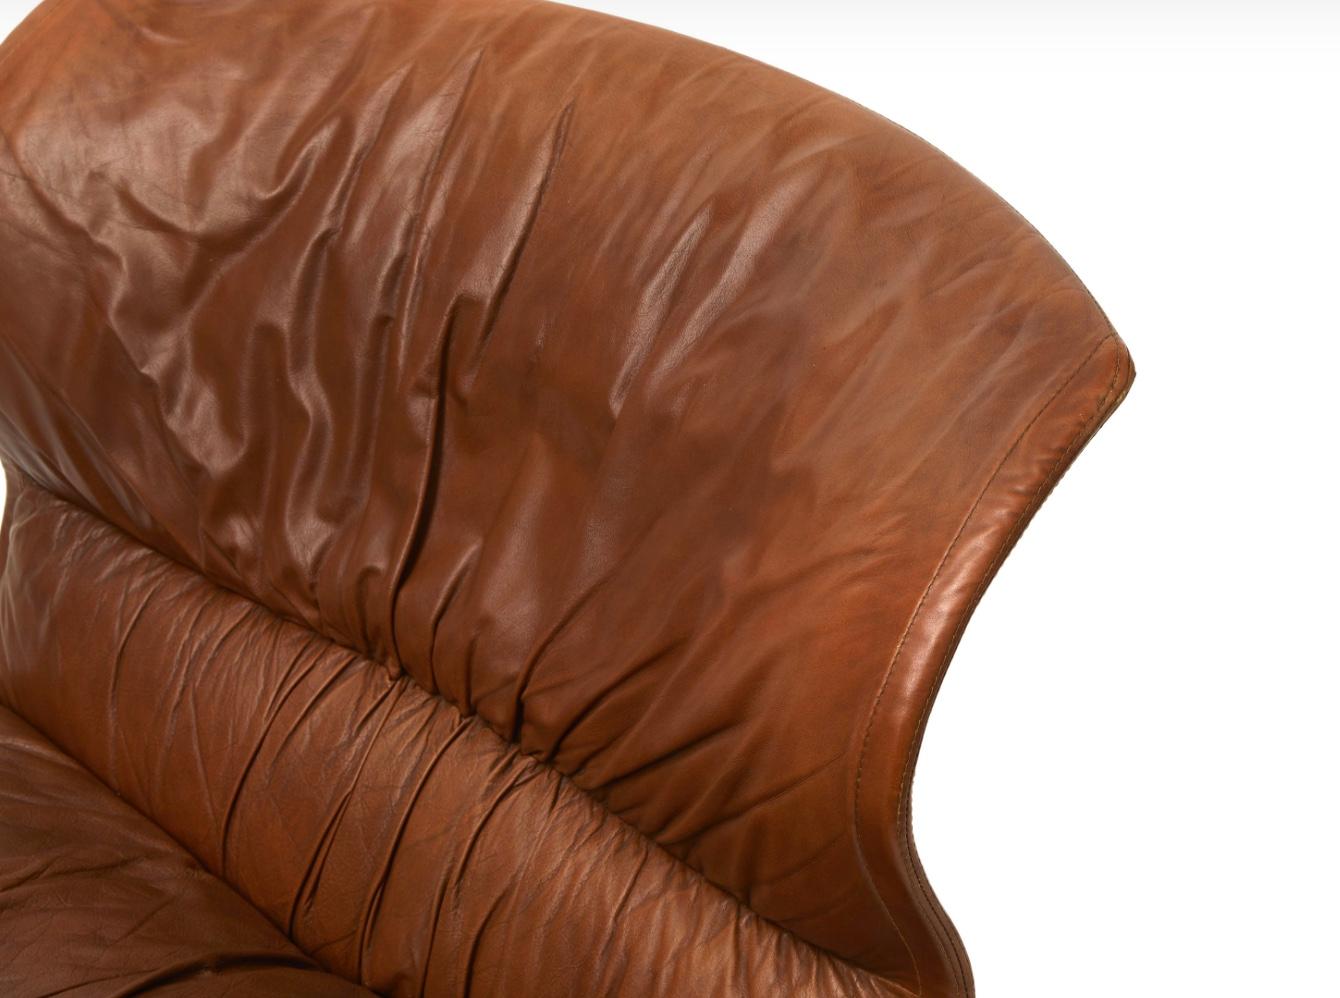 Saporiti armchairs “Vela Bassa” chrome metal leather, 1955, Italy.